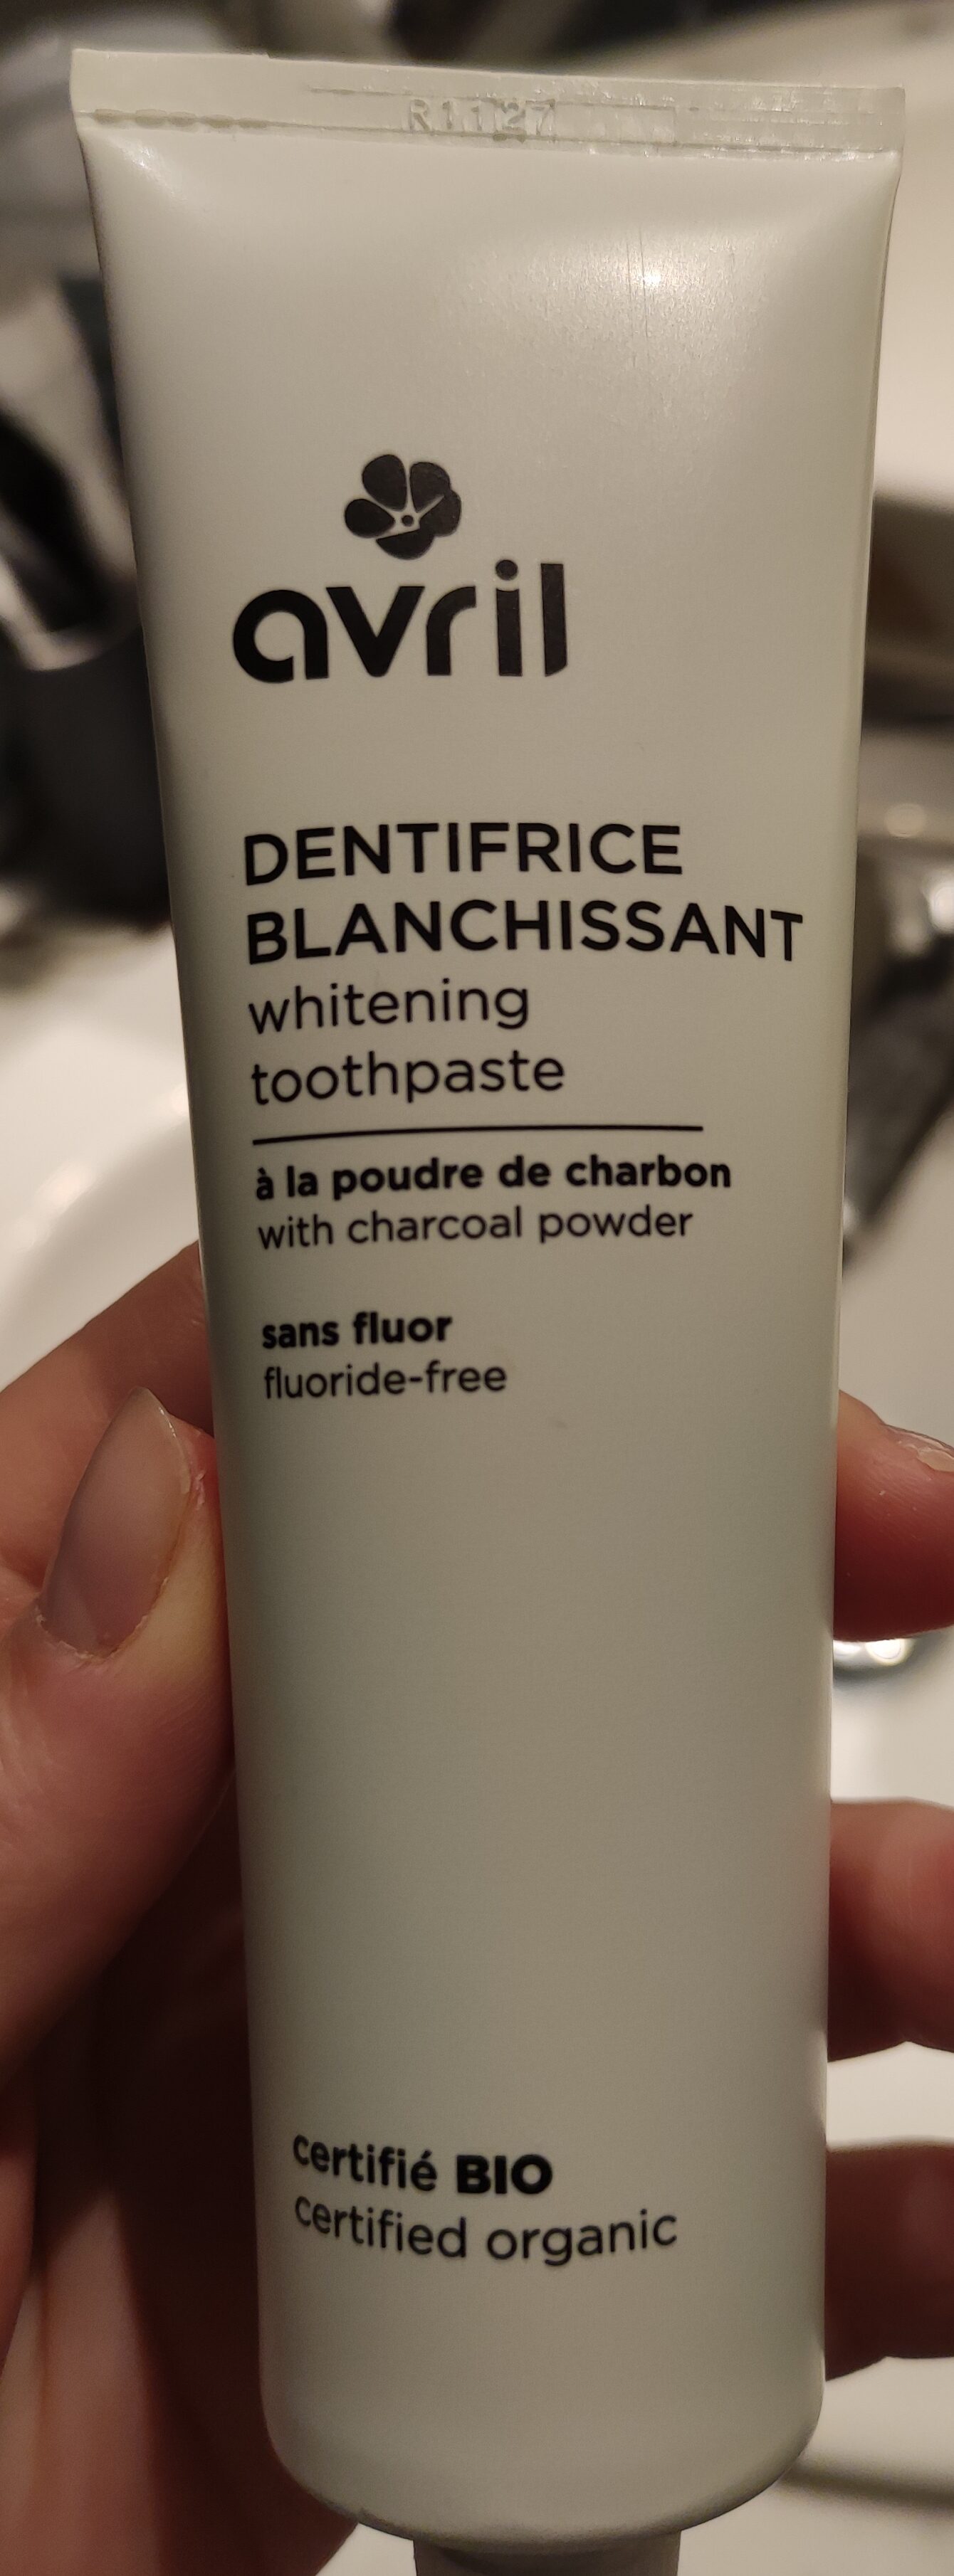 Avril dentifrice blanchissant - 製品 - fr